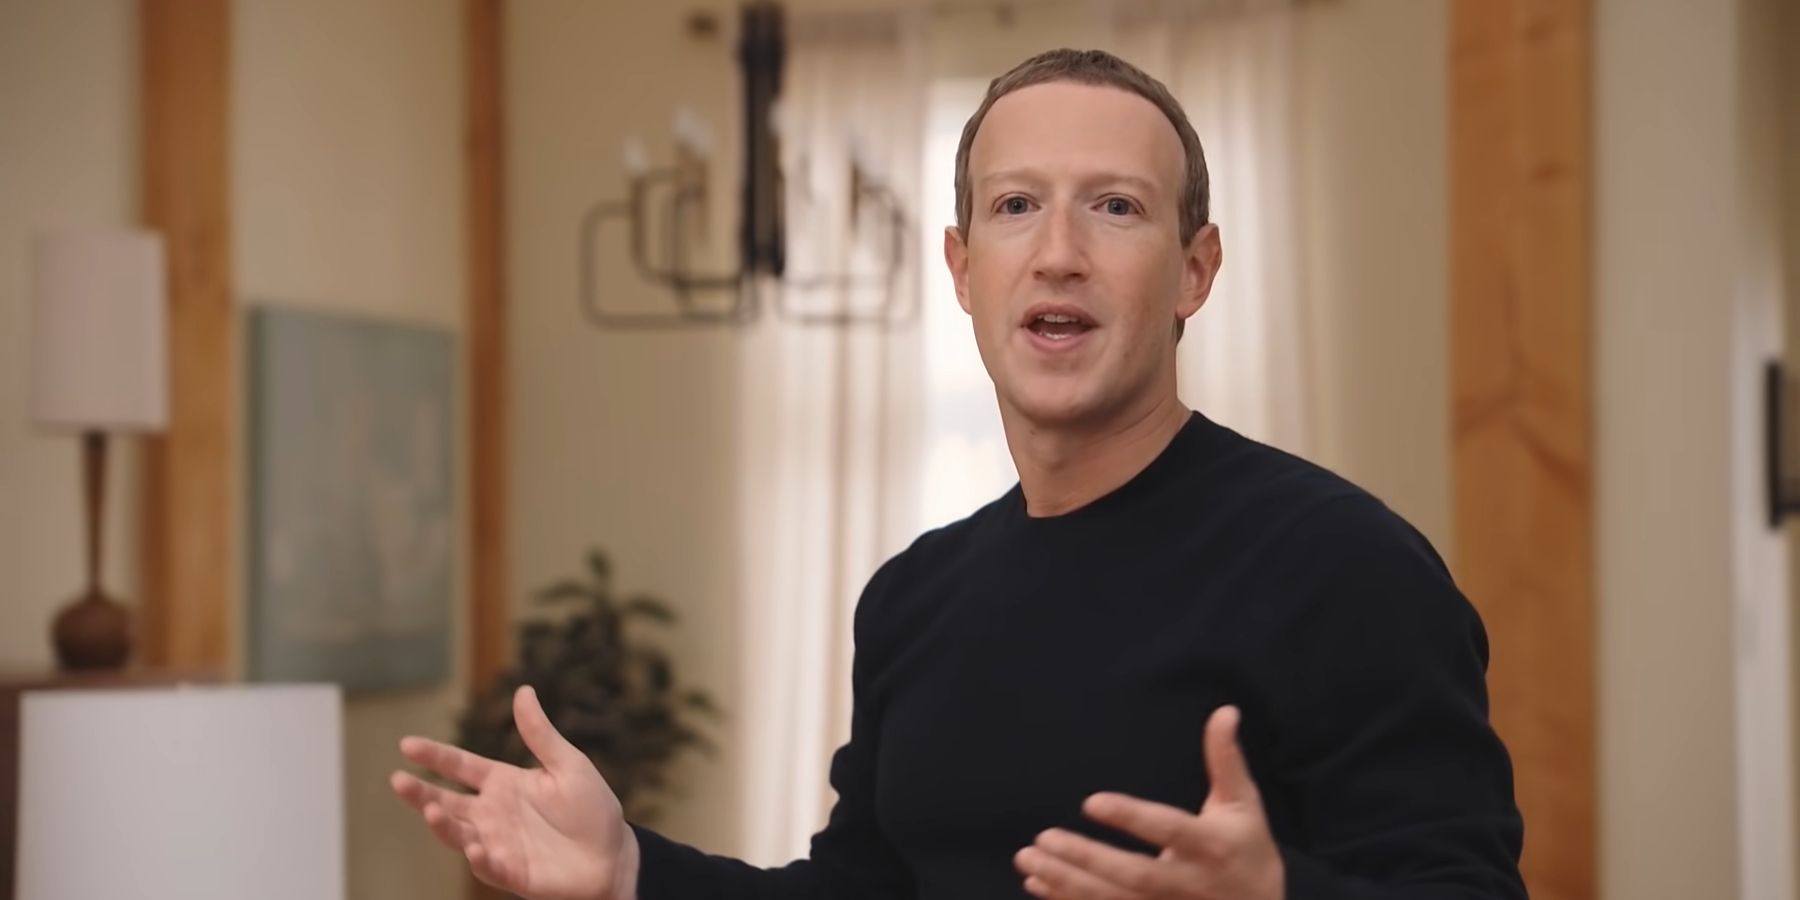 Facebook Whistleblower Says Zuckerberg Should Resign as Meta CEO